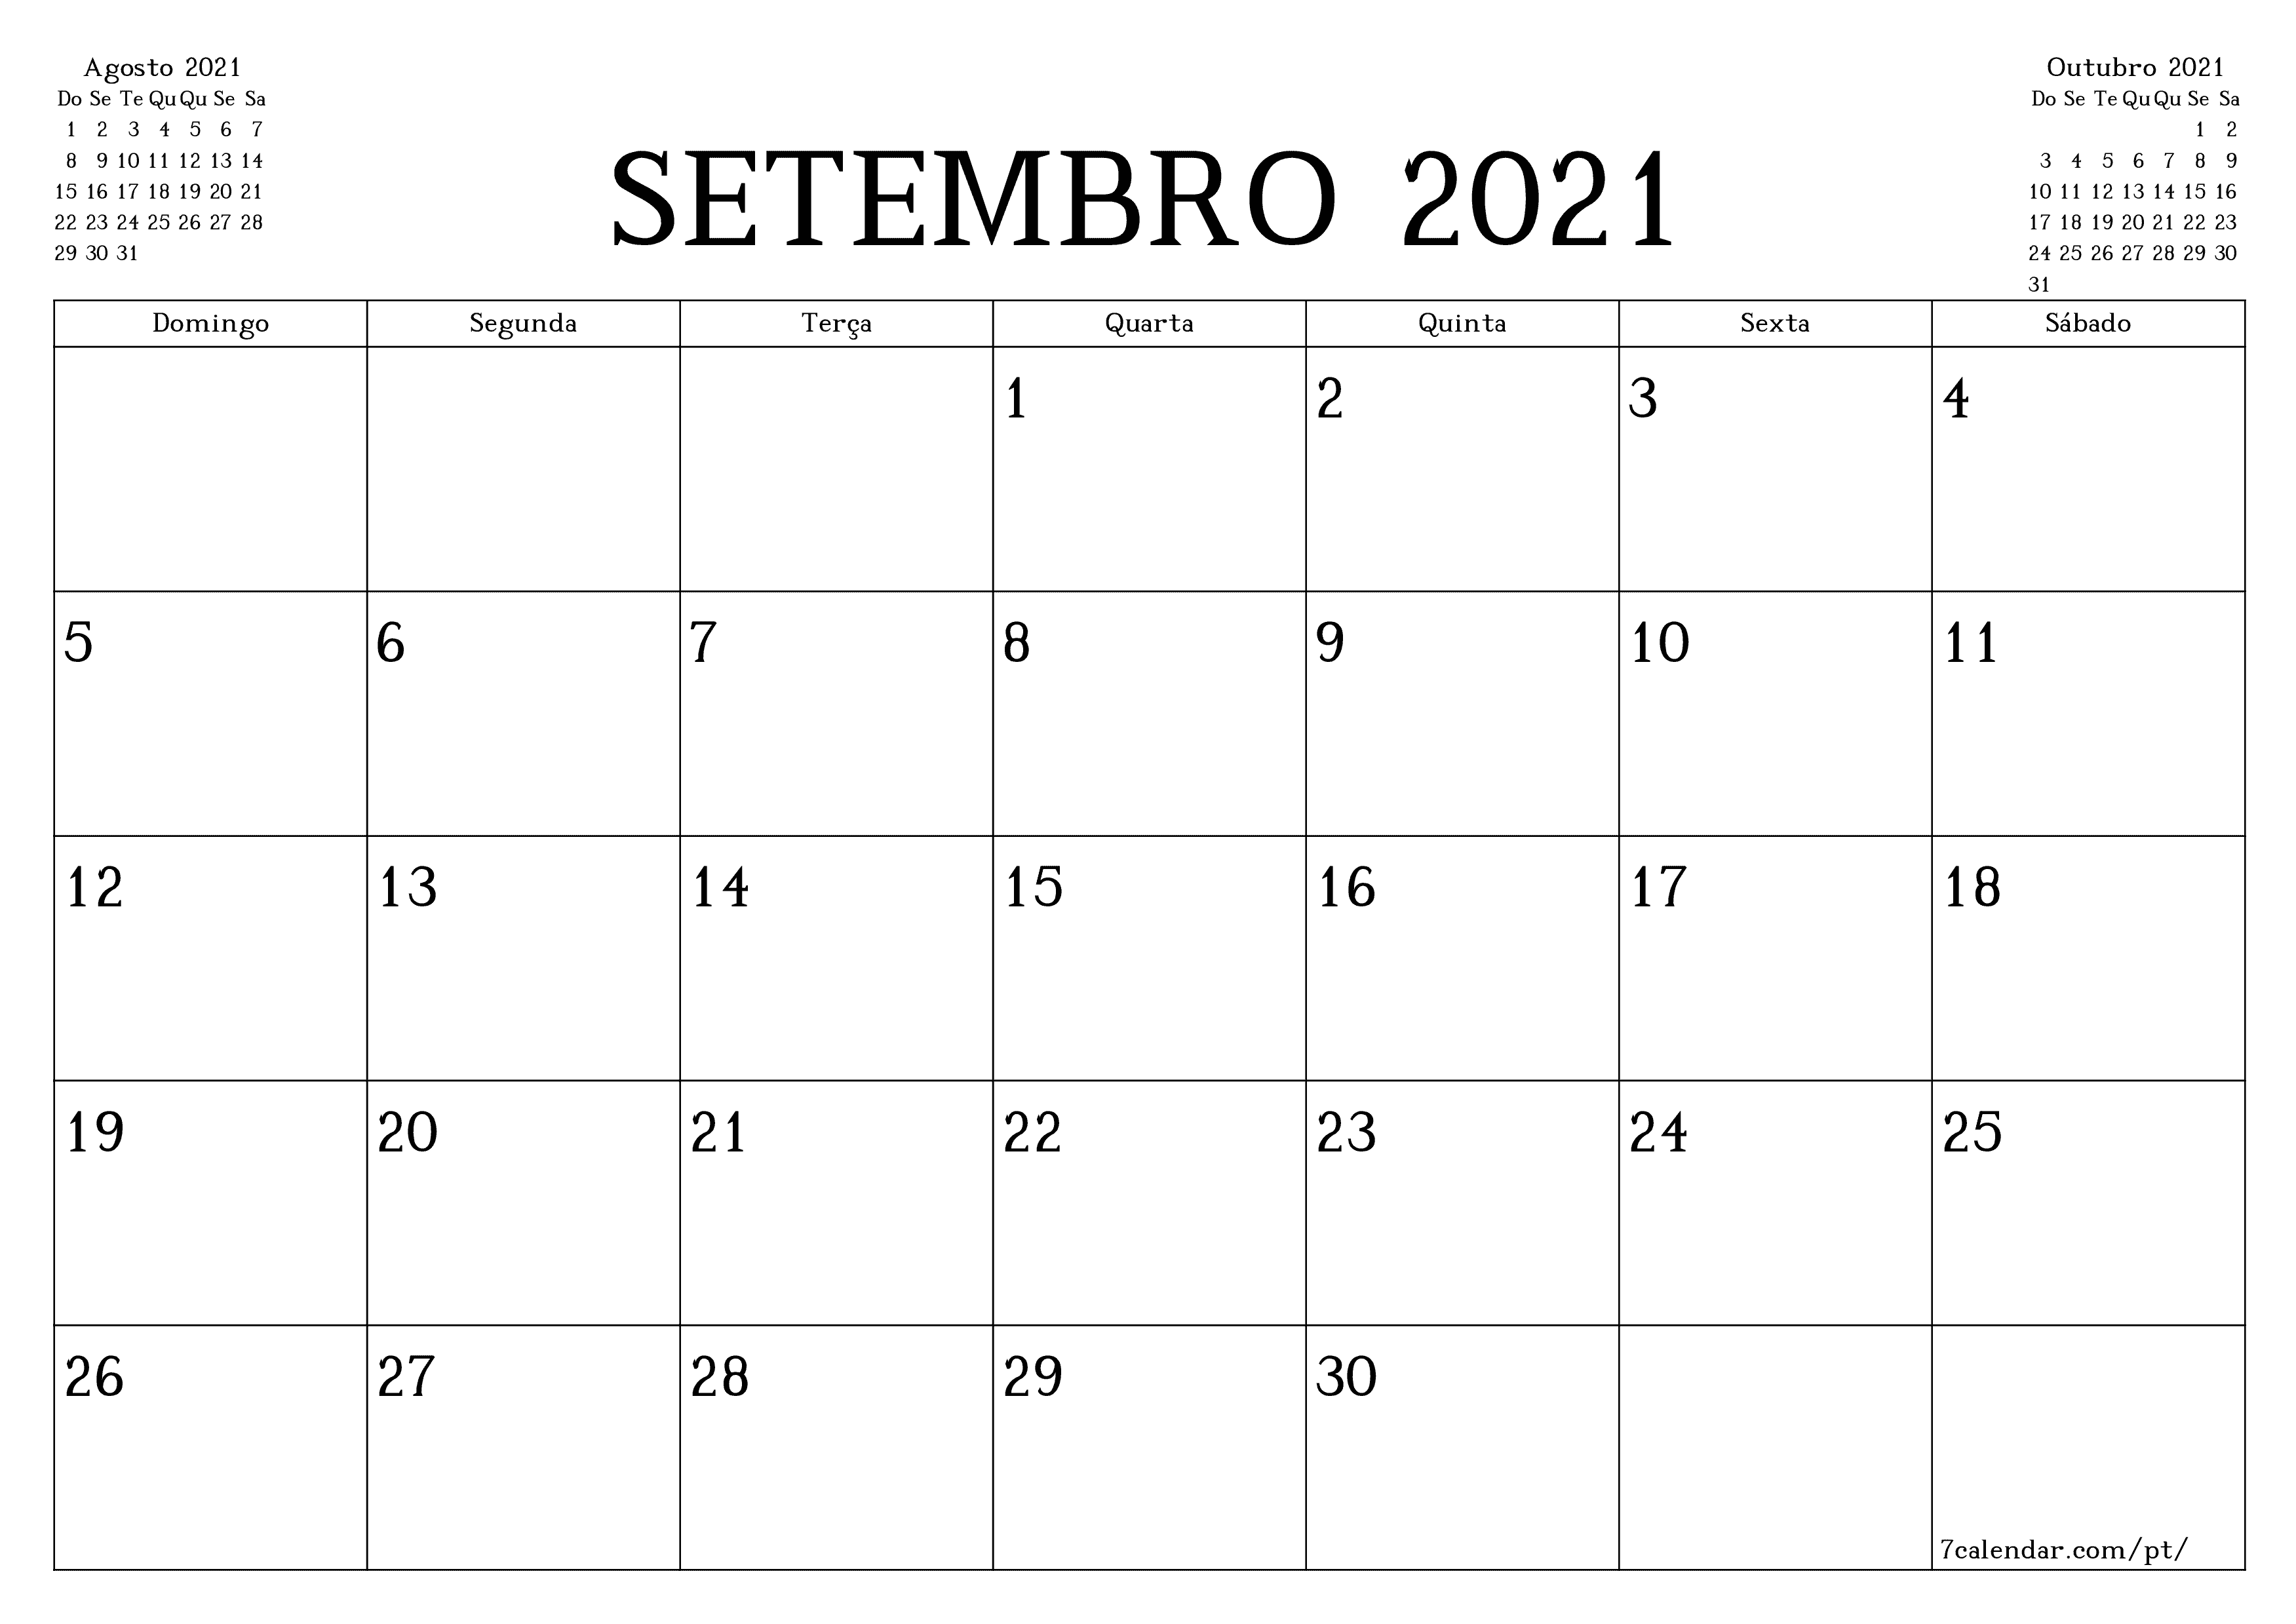 Calendarios E Planejadores Imprimiveis Para O Mes Setembro 2021 A4 A3 Para Pdf E Png 7calendar